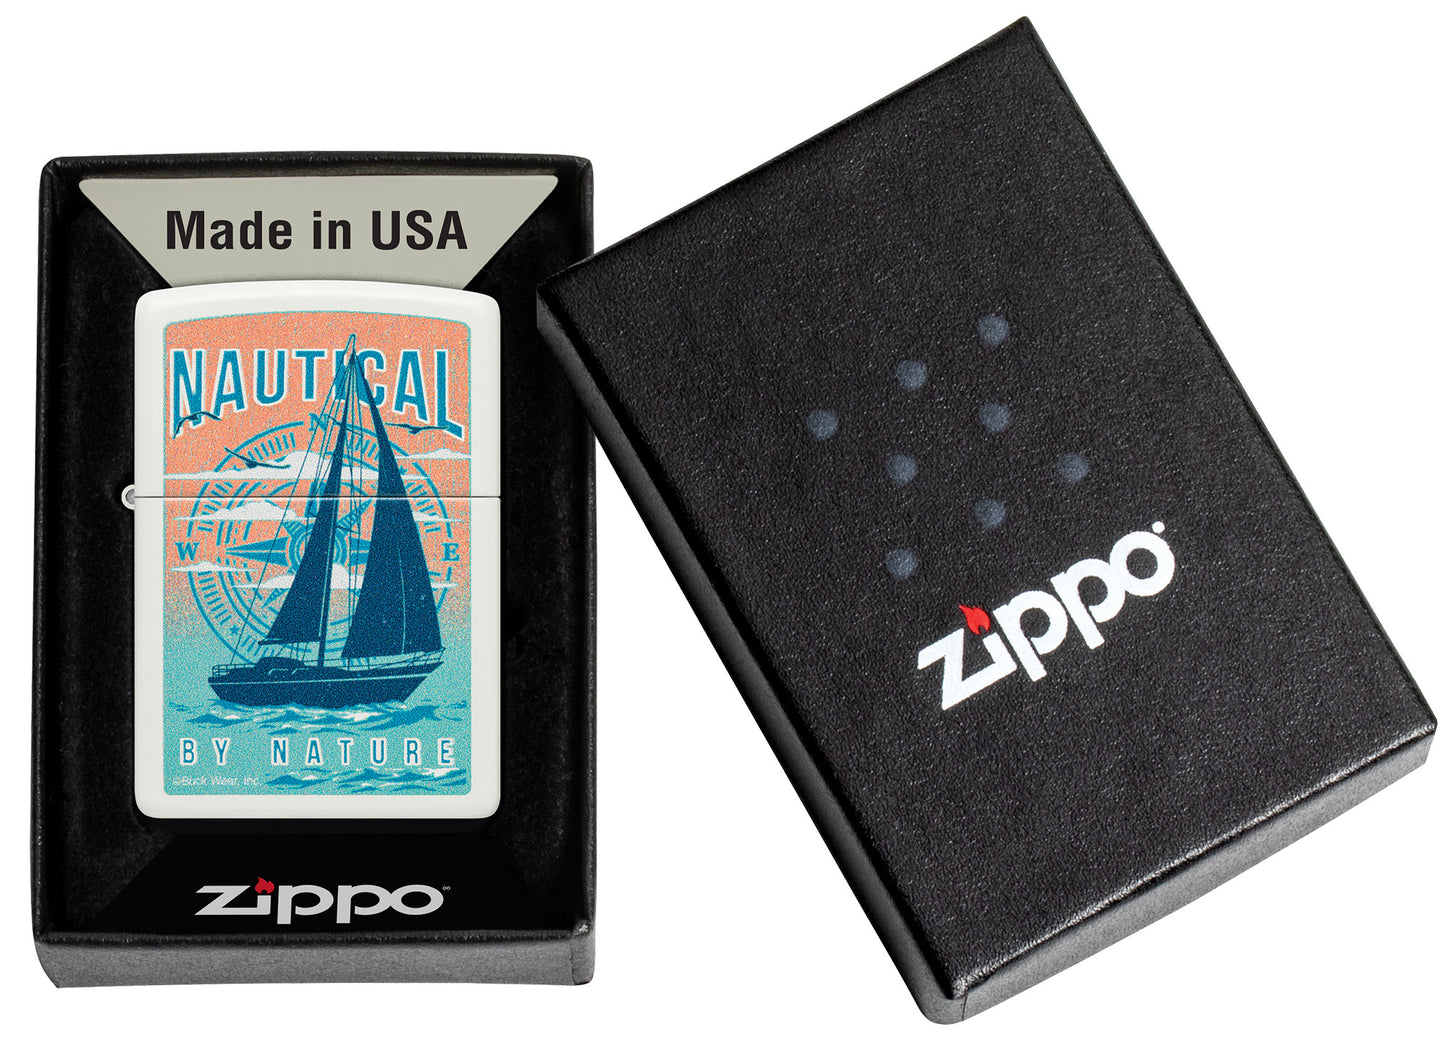 Zippo Buck Wear Nautical Design White Matte Windproof Lighter in its packaging.